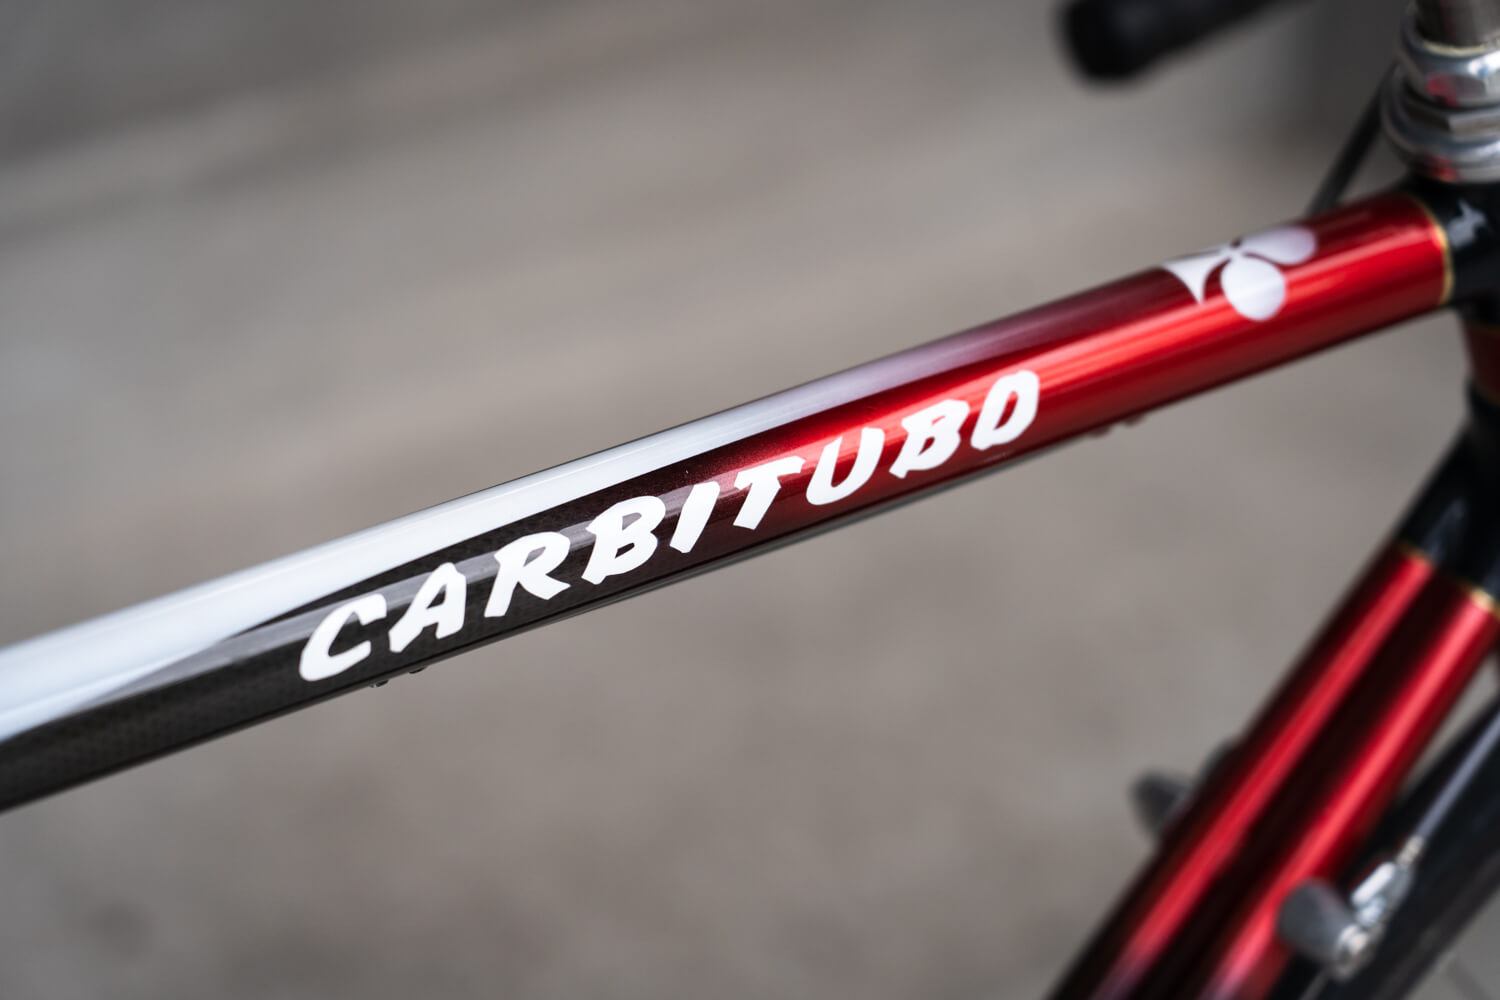 Beautiful Bicycle - Ryan's Colnago Carbitubo